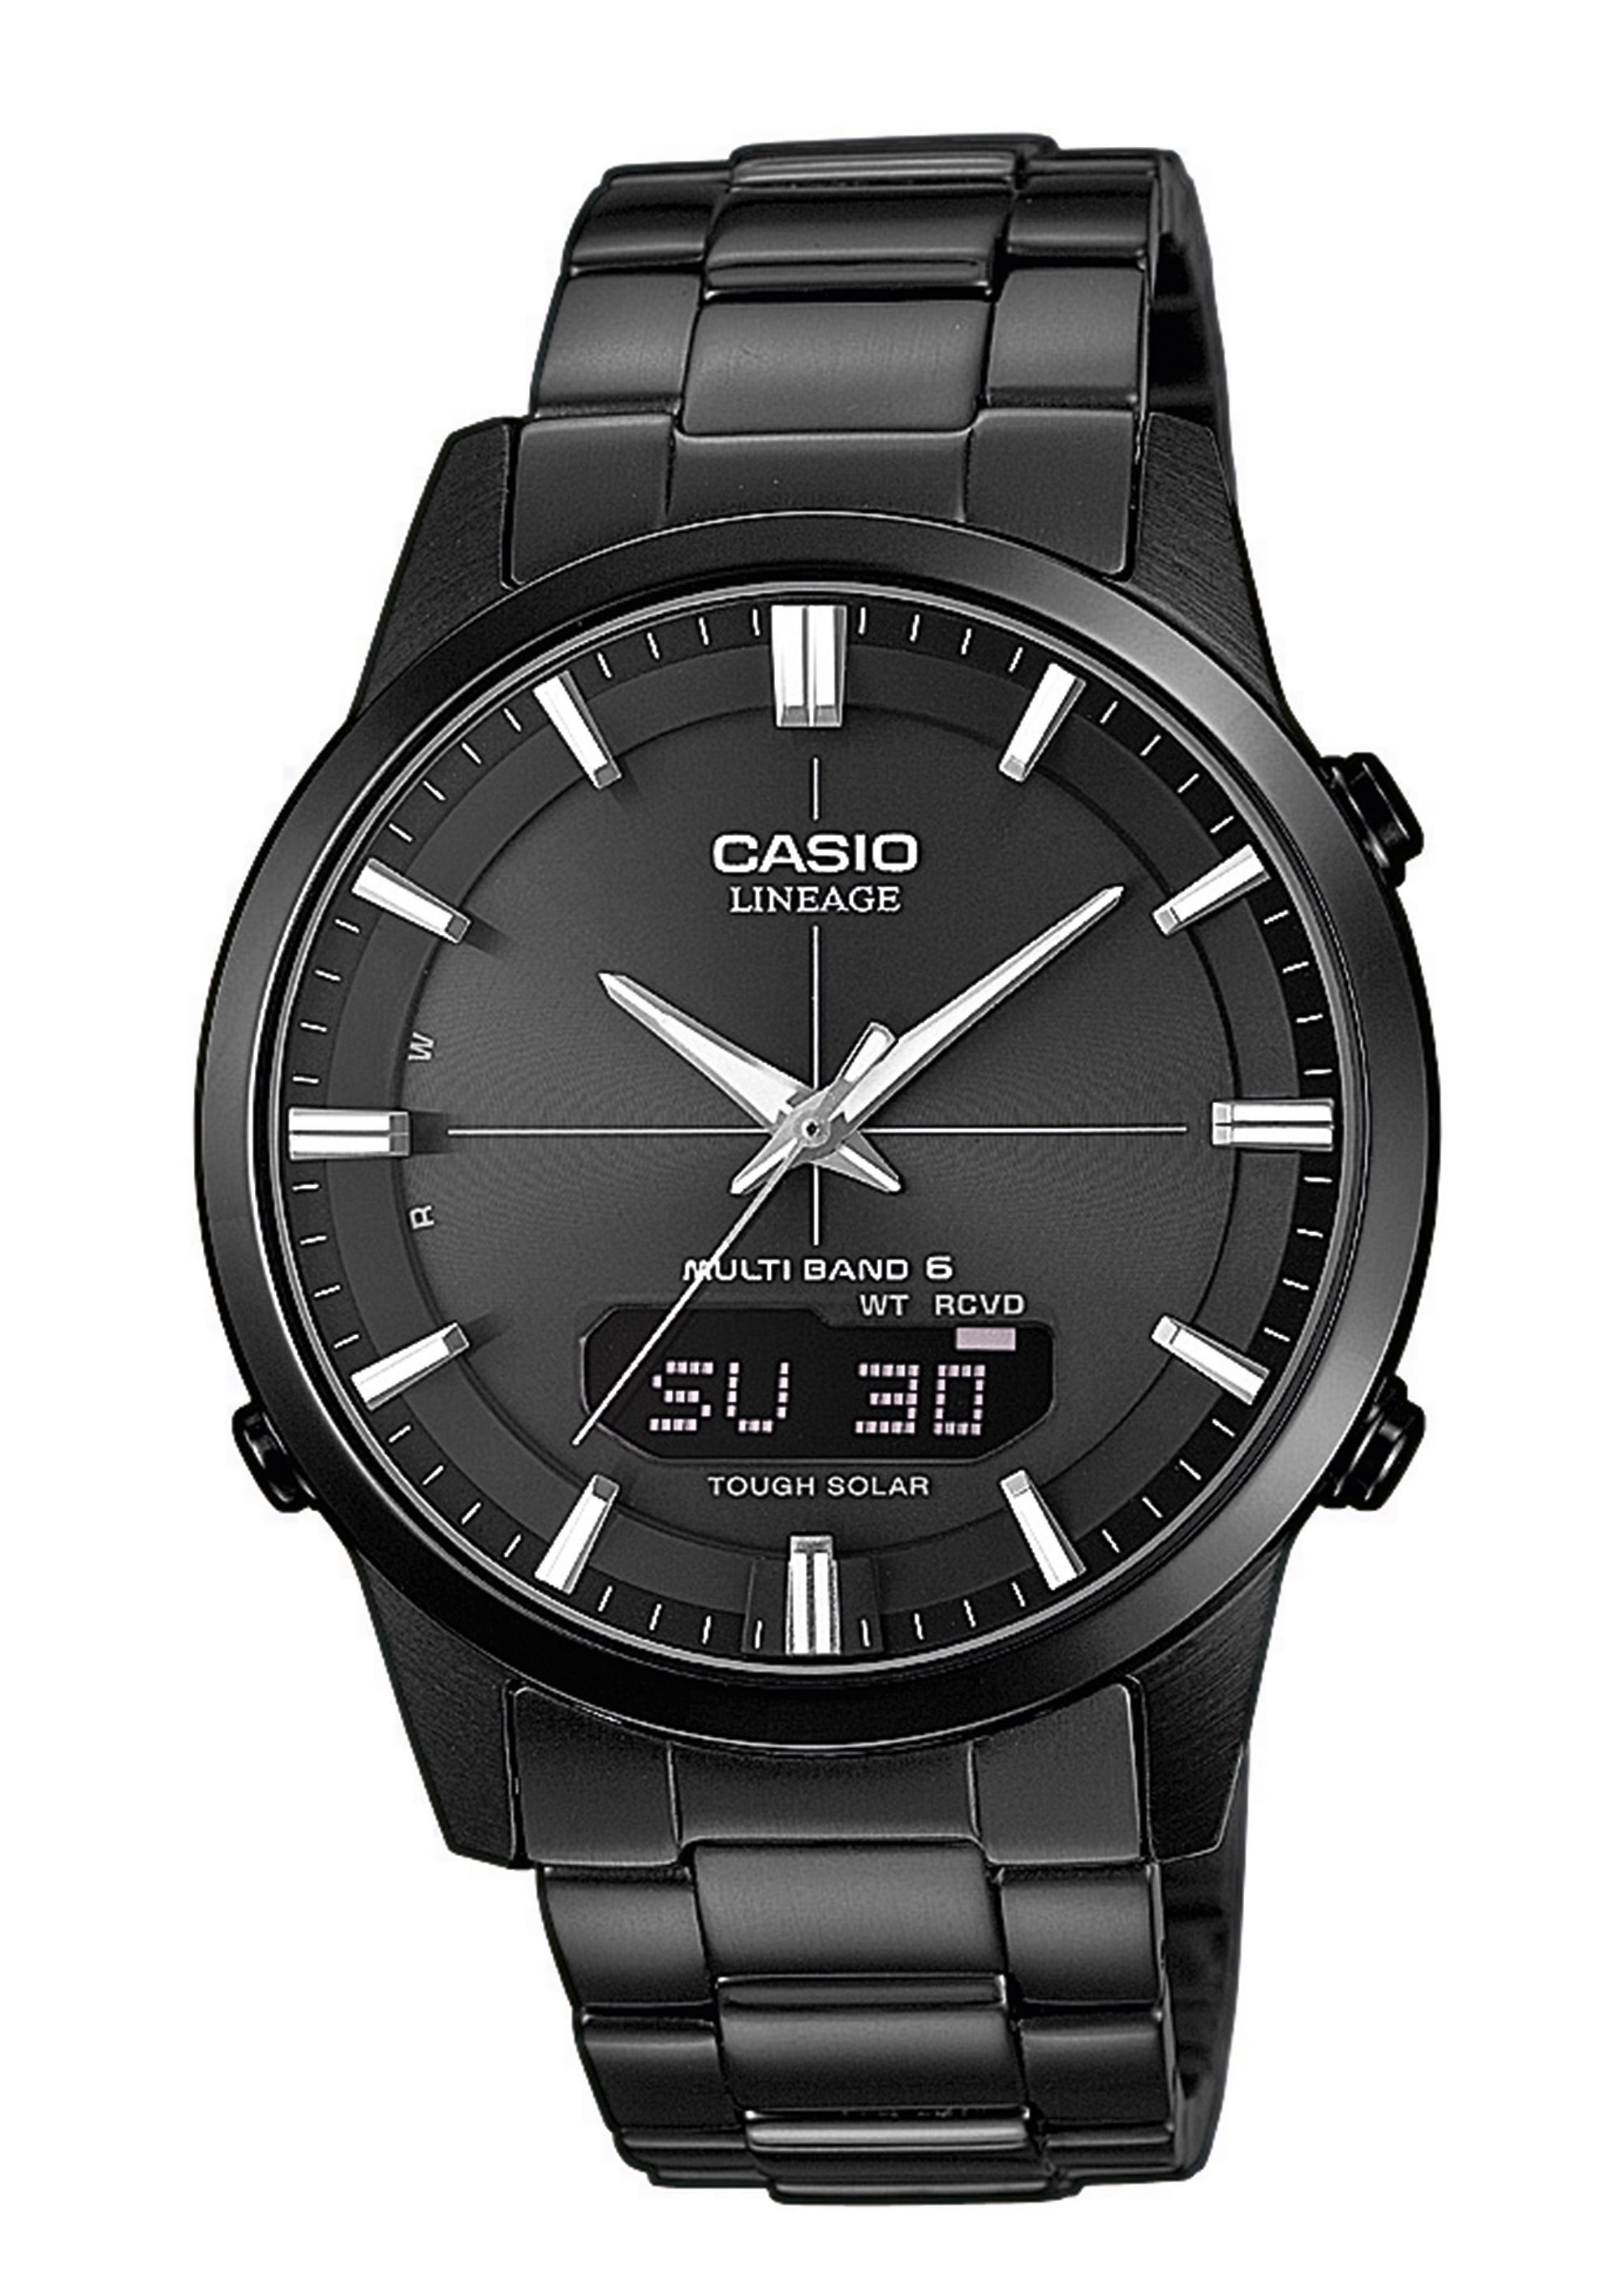 Casio Funk Funkchronograph LCW-M170DB-1AER, Solaruhr, Armbanduhr, Herren, digital, Stoppfunktion